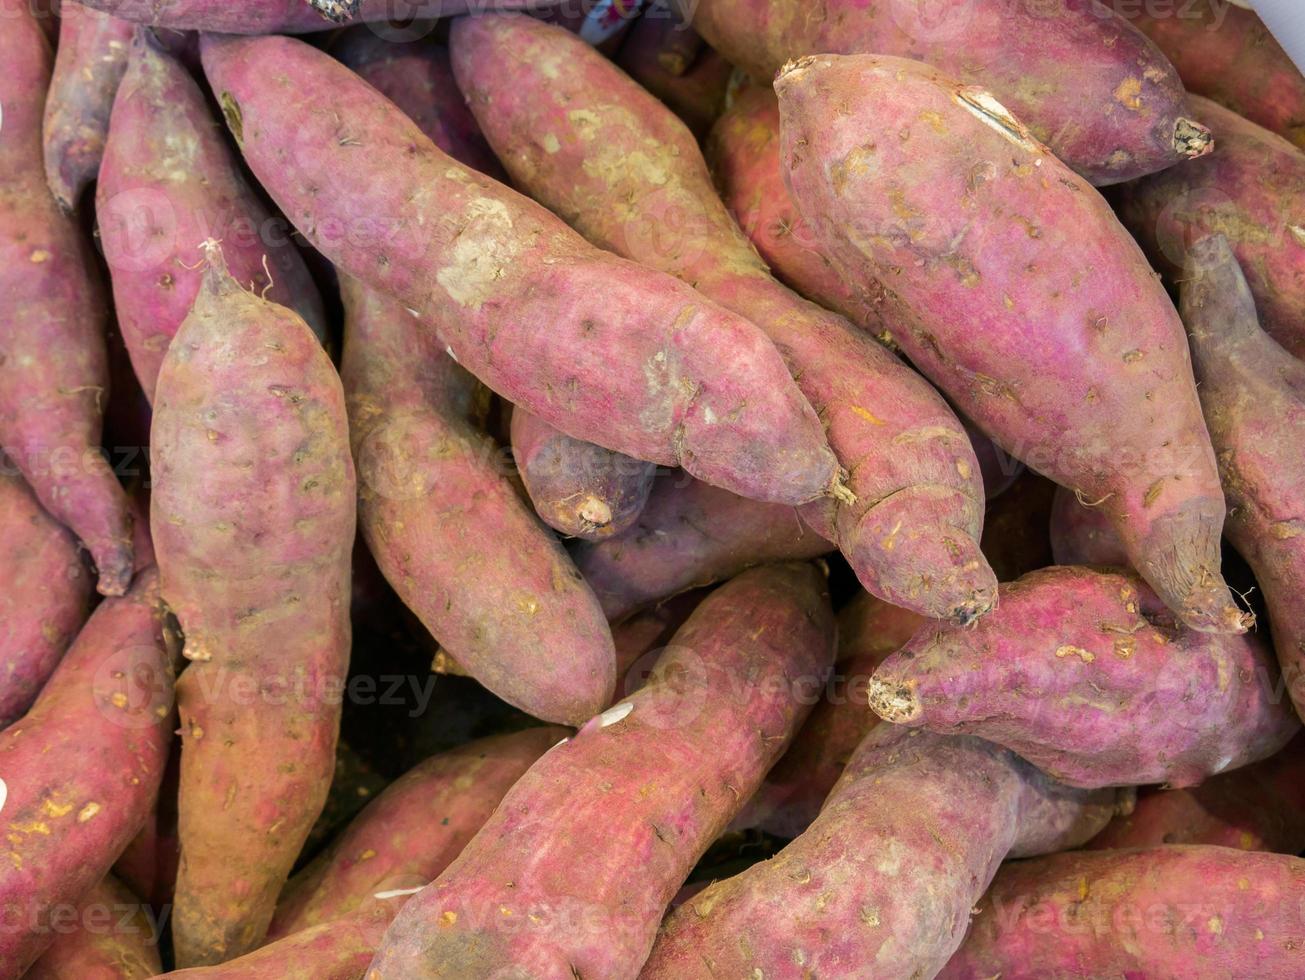 Natural red sweet potatoes photo